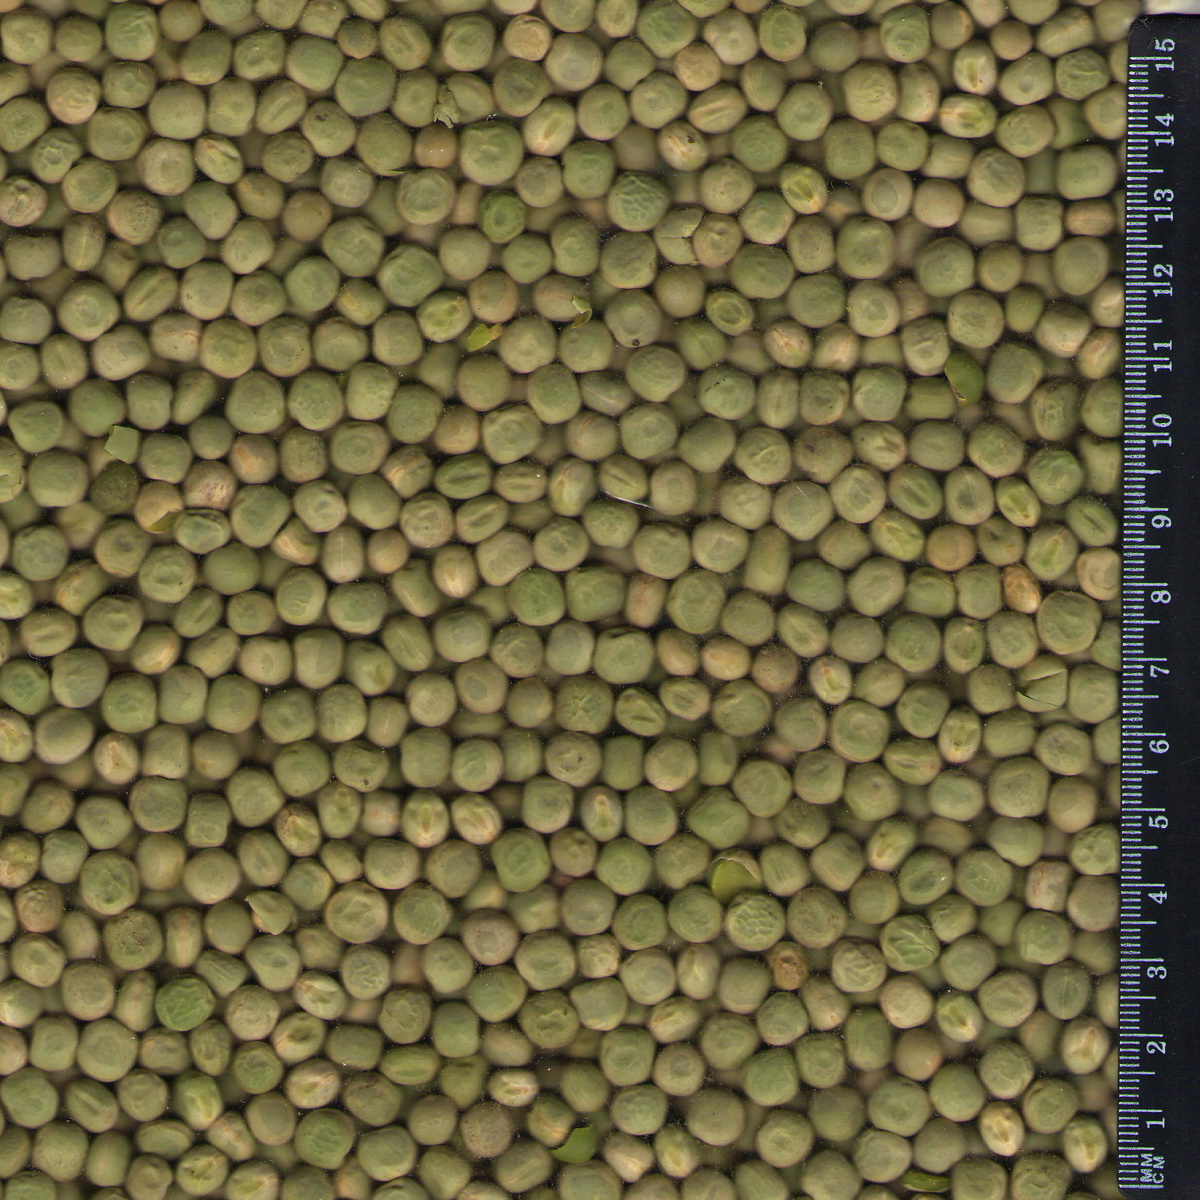 Green pea image